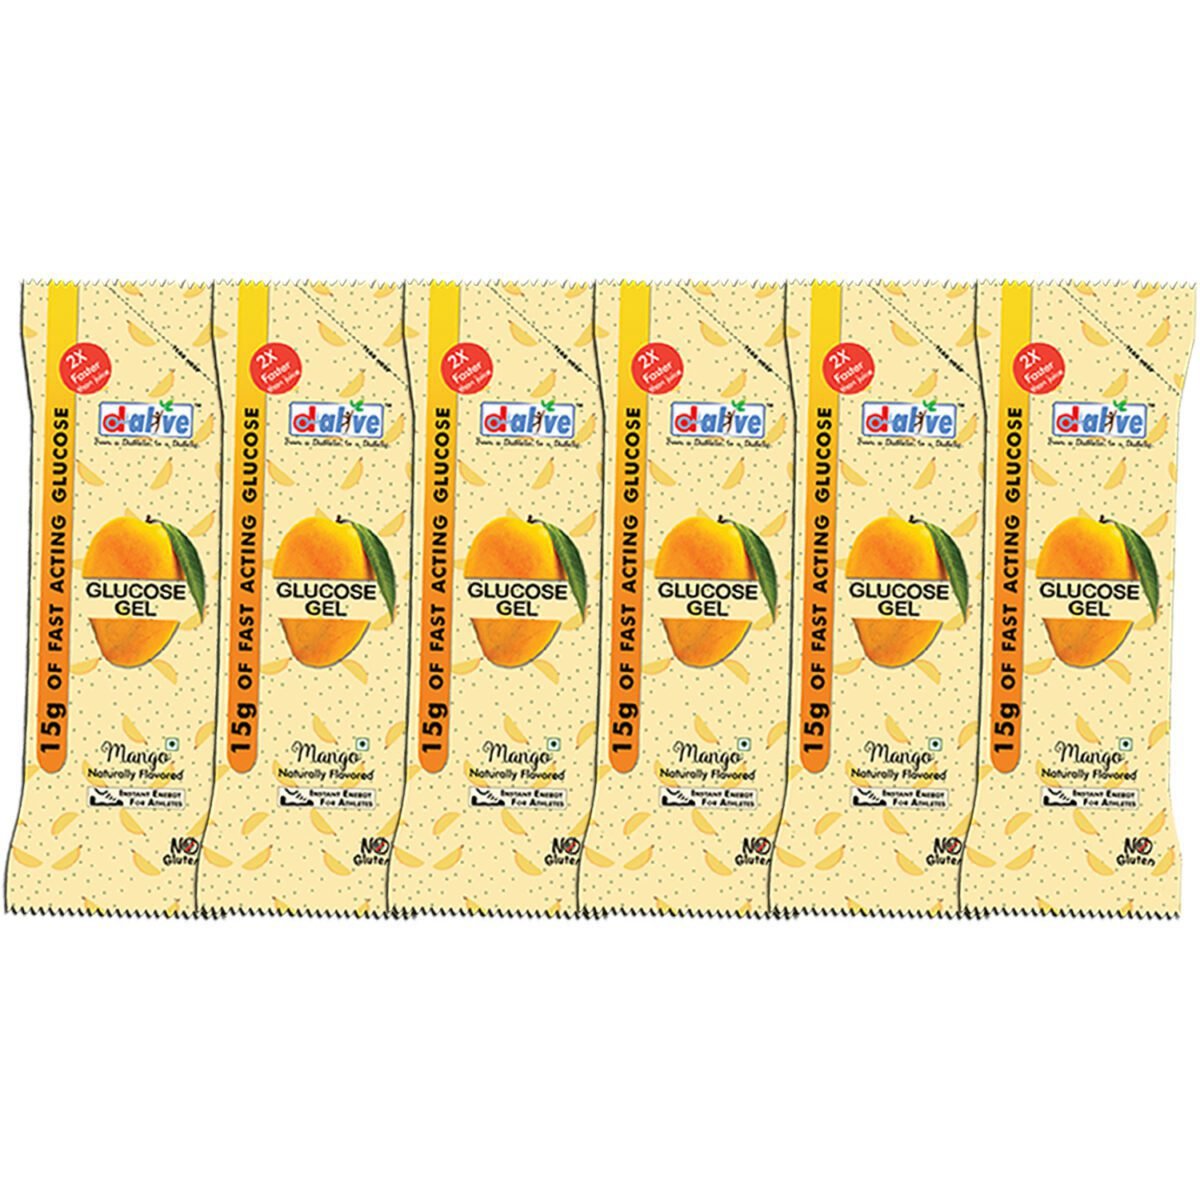 Mango-glucose-Pack-of-6-d-alive